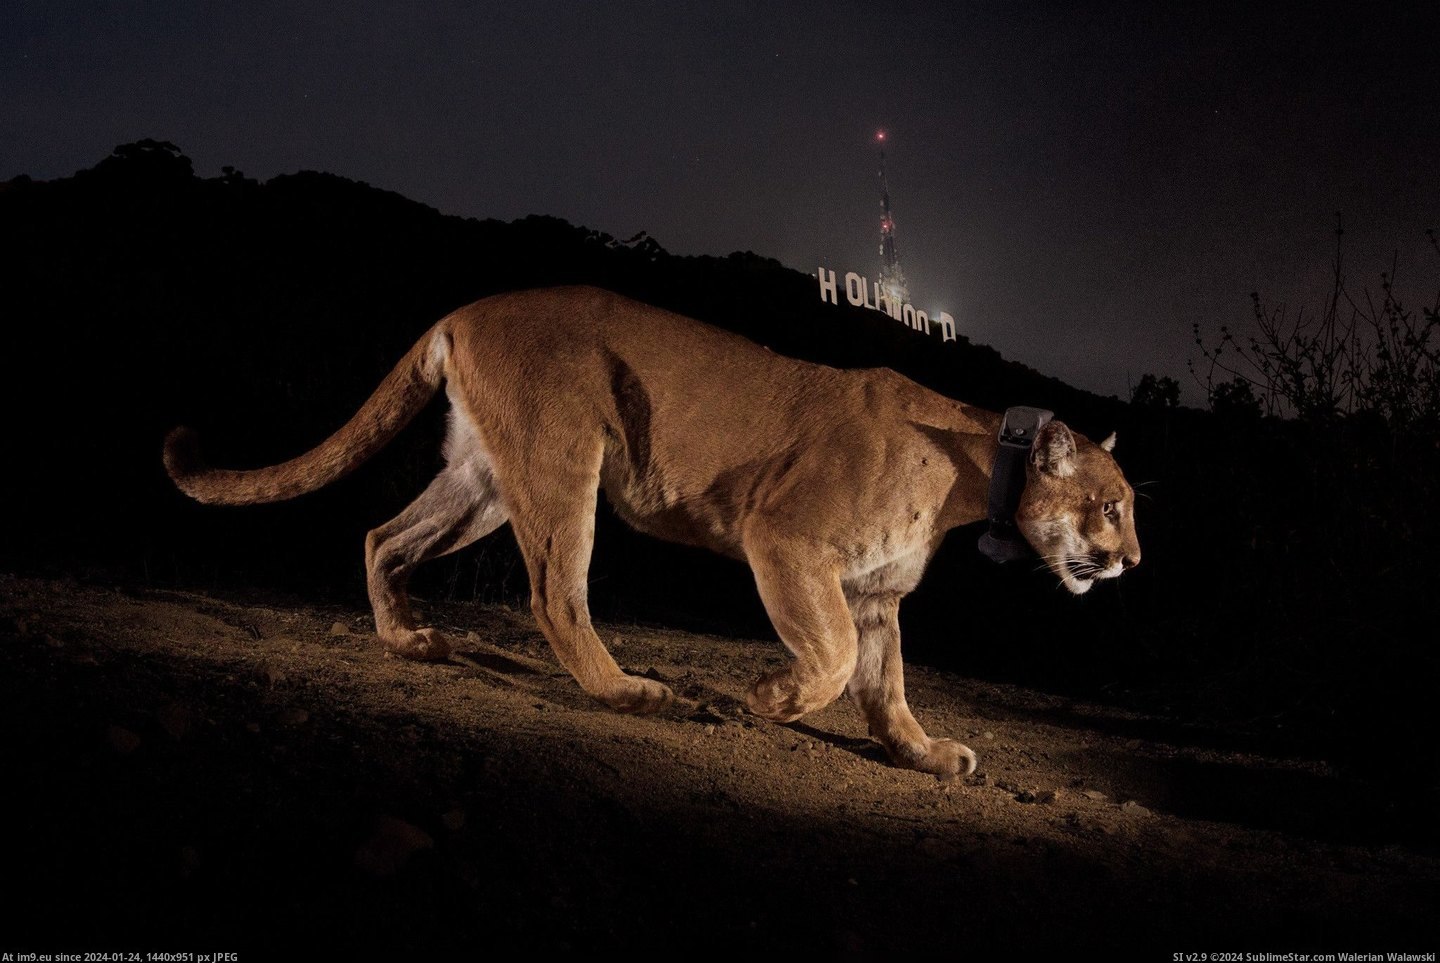 #Hollywood  #Cougar [Pics] A Cougar in Hollywood Pic. (Bild von album My r/PICS favs))